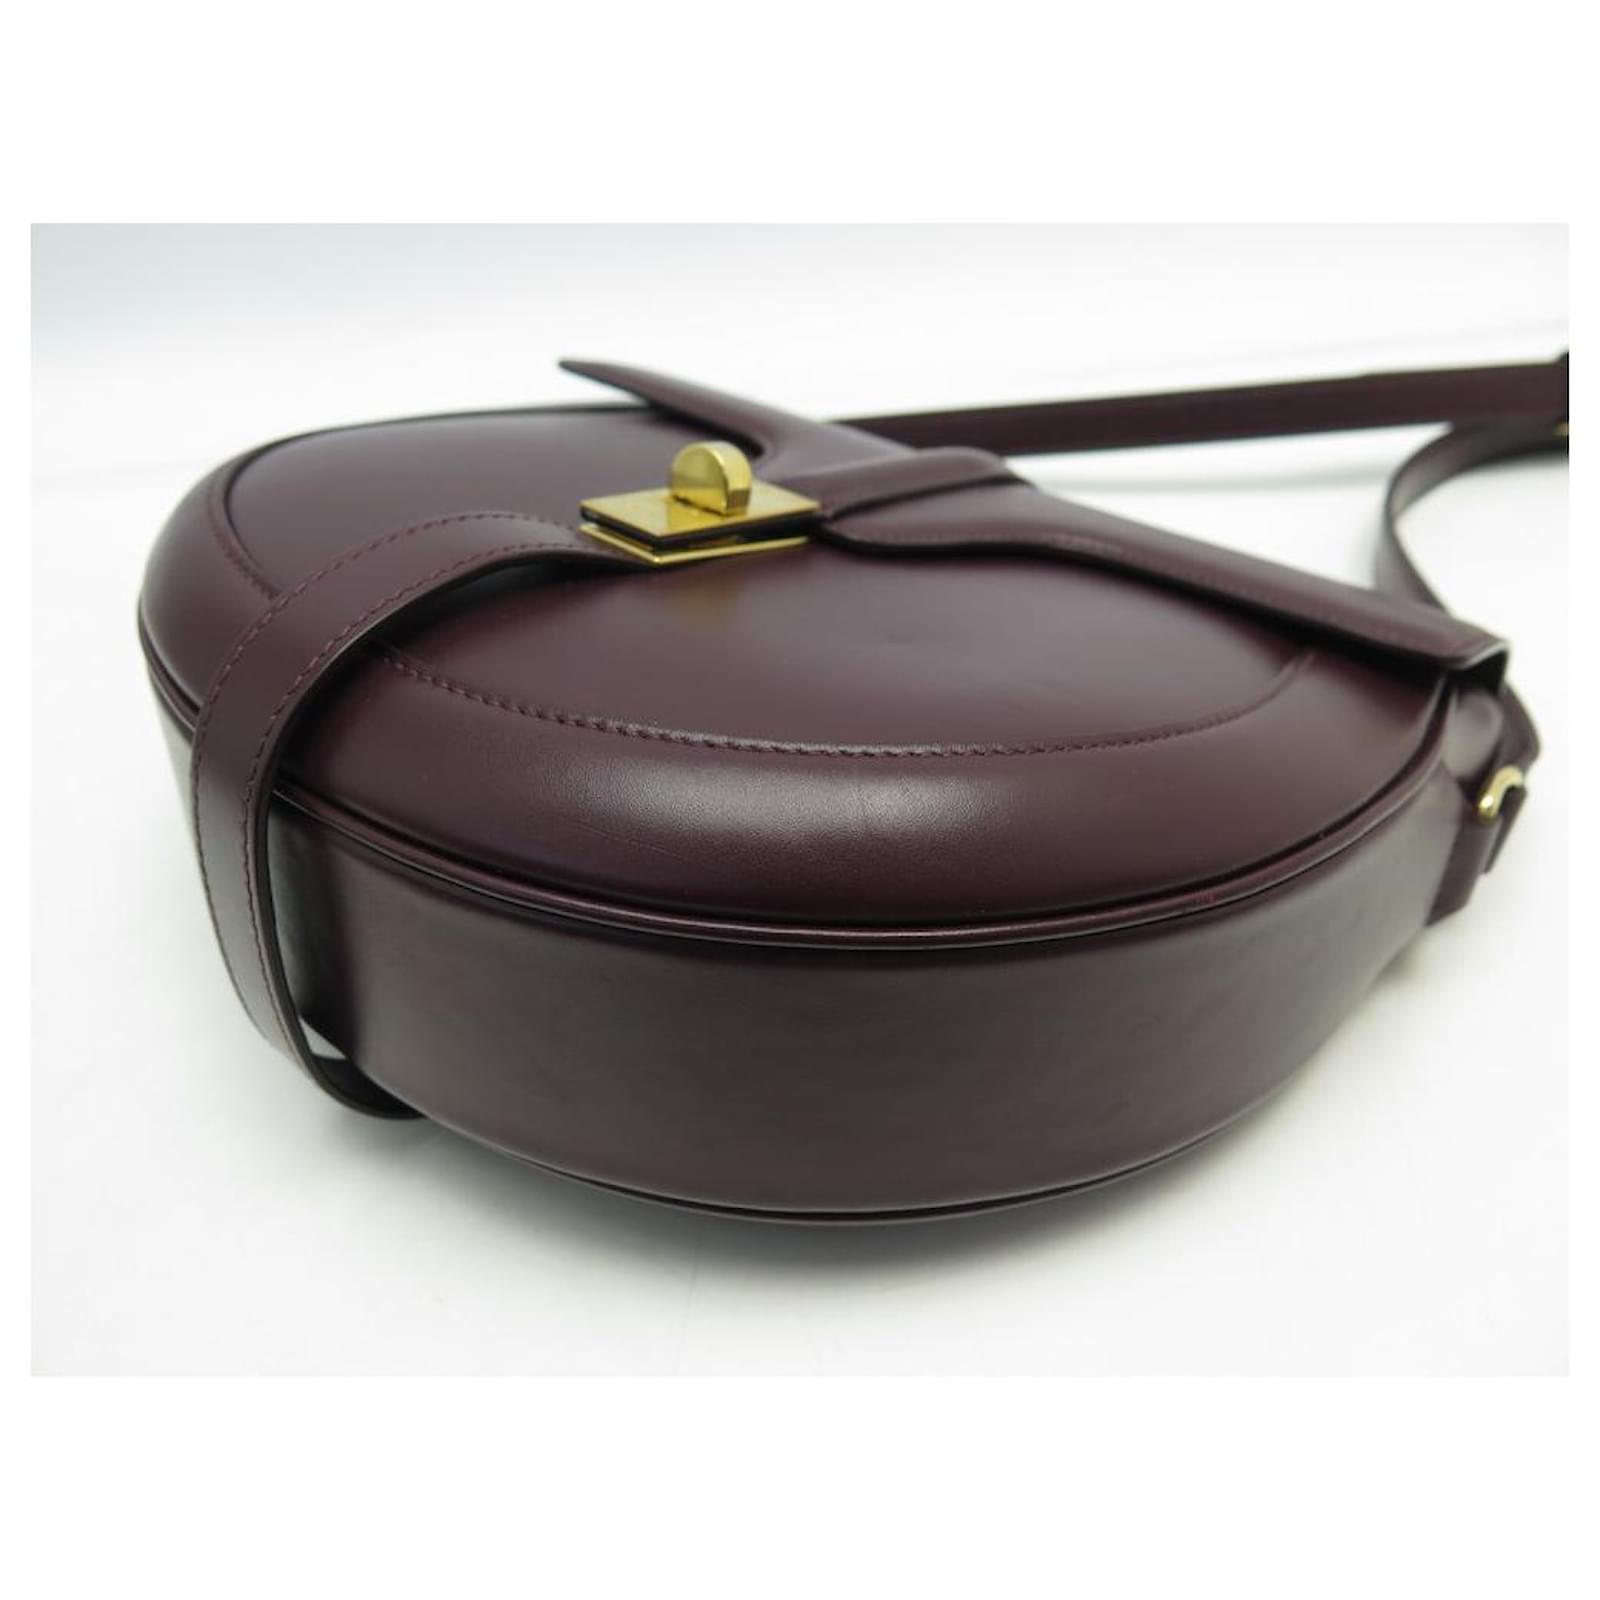 Celine Besace Leather Crossbody Bag in Burgundy - ShopStyle